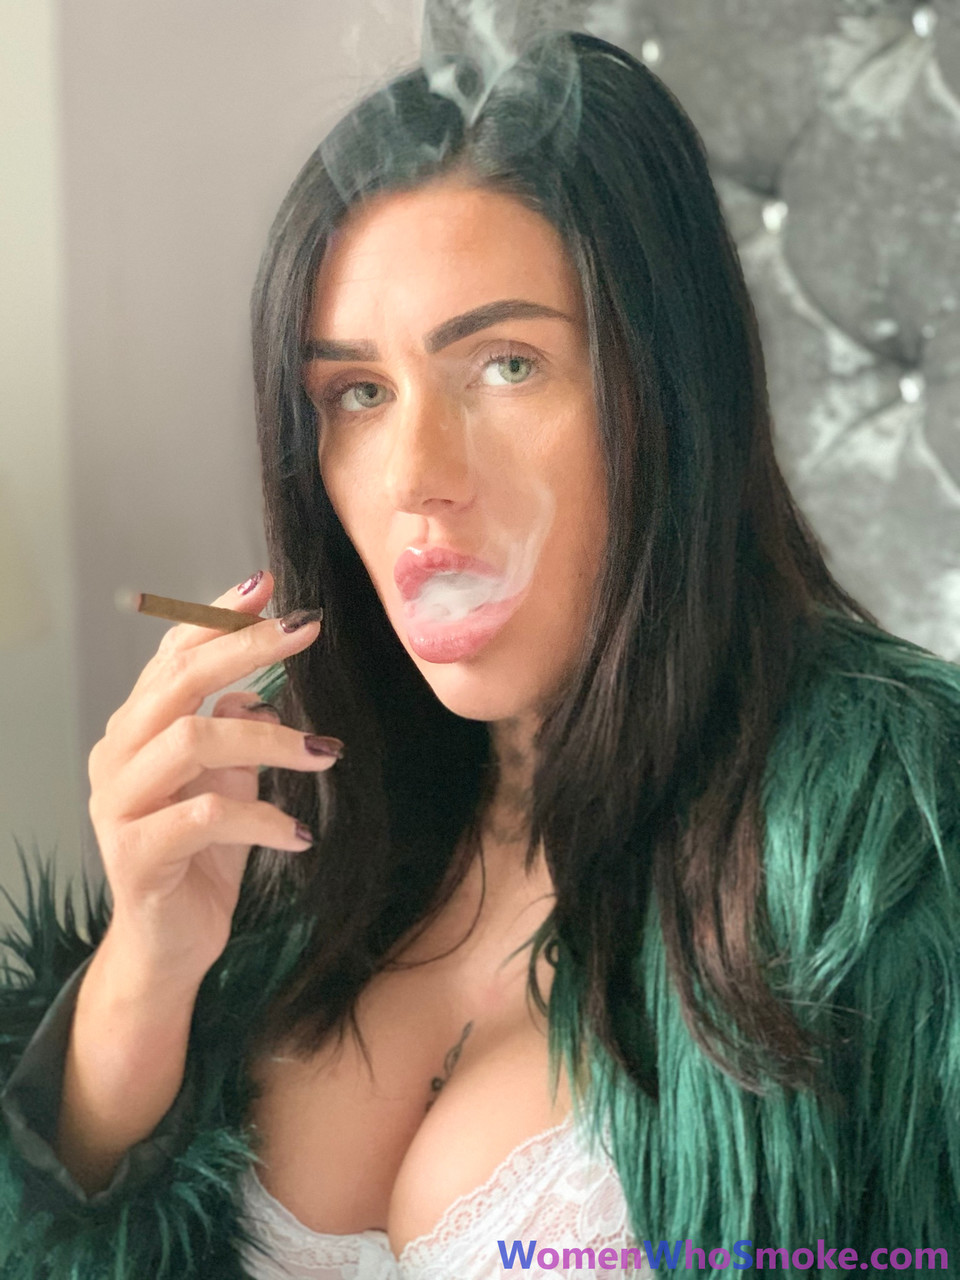 Stunning brunette teases with her big boobs while smoking in sexy lingerie porno fotoğrafı #426607879 | Women Who Smoke Pics, Smoking, mobil porno